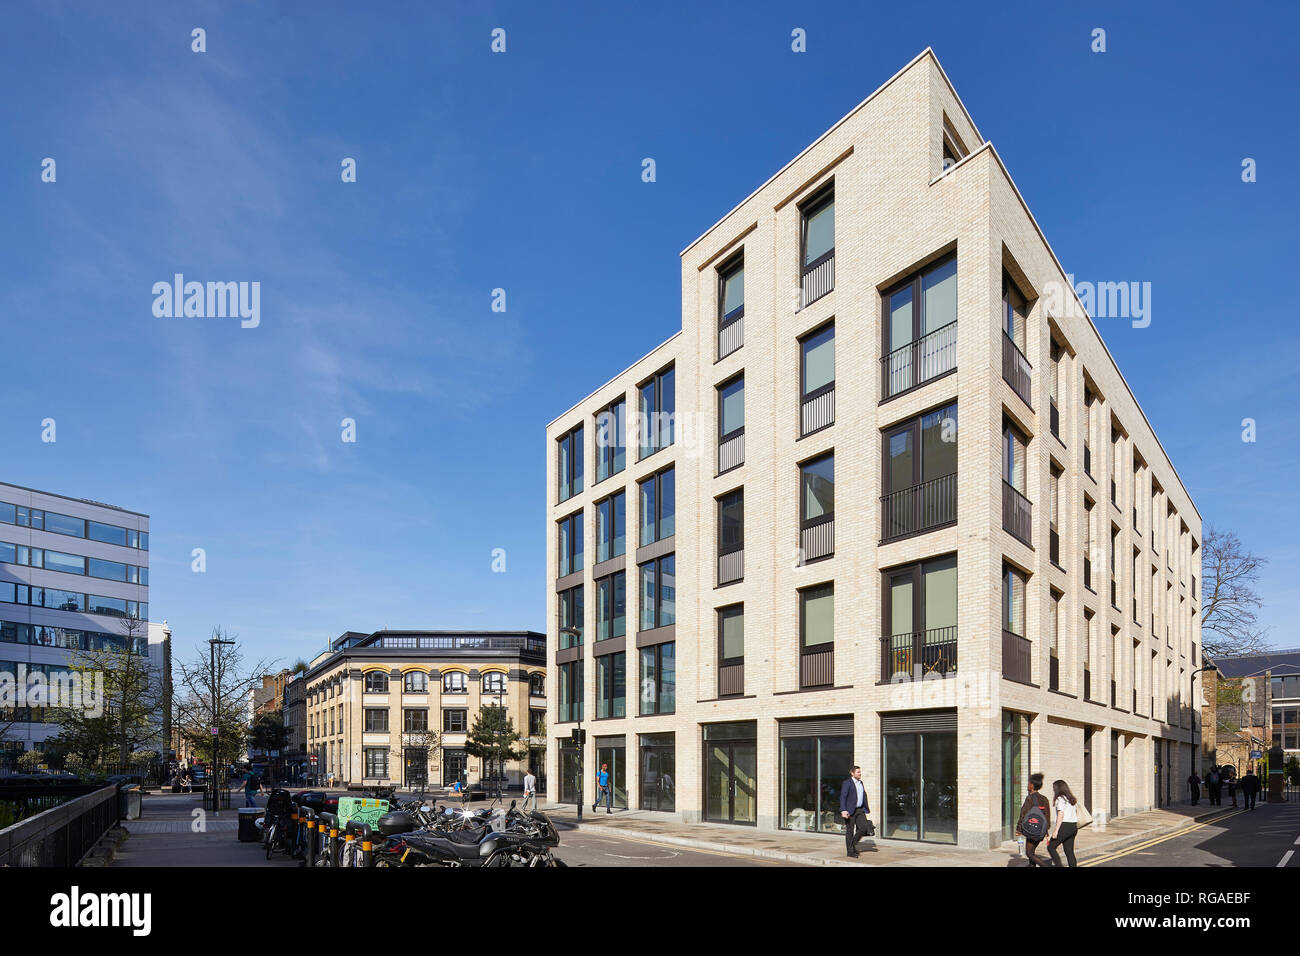 Building in context with Paul Street. Paul Street, London, United Kingdom. Architect: Stiff + Trevillion Architects, 2018. Stock Photo